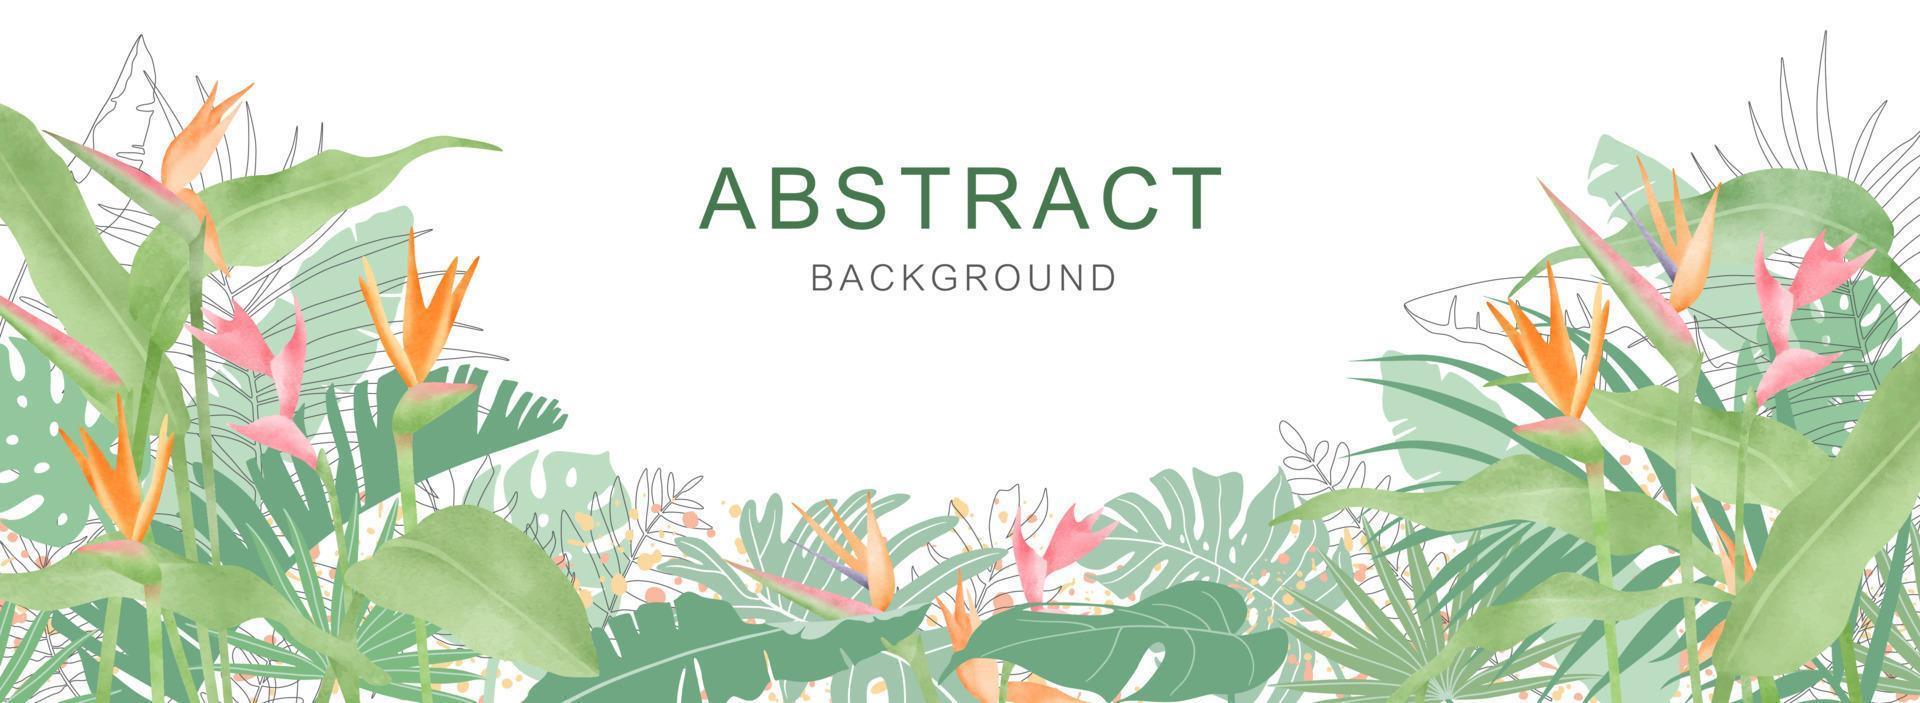 resumen follaje y botánico antecedentes. verde tropical bosque fondo de pantalla de pájaro de paraíso, monstera hojas, palma hoja, ramas en mano dibujado modelo. vector ilustración.